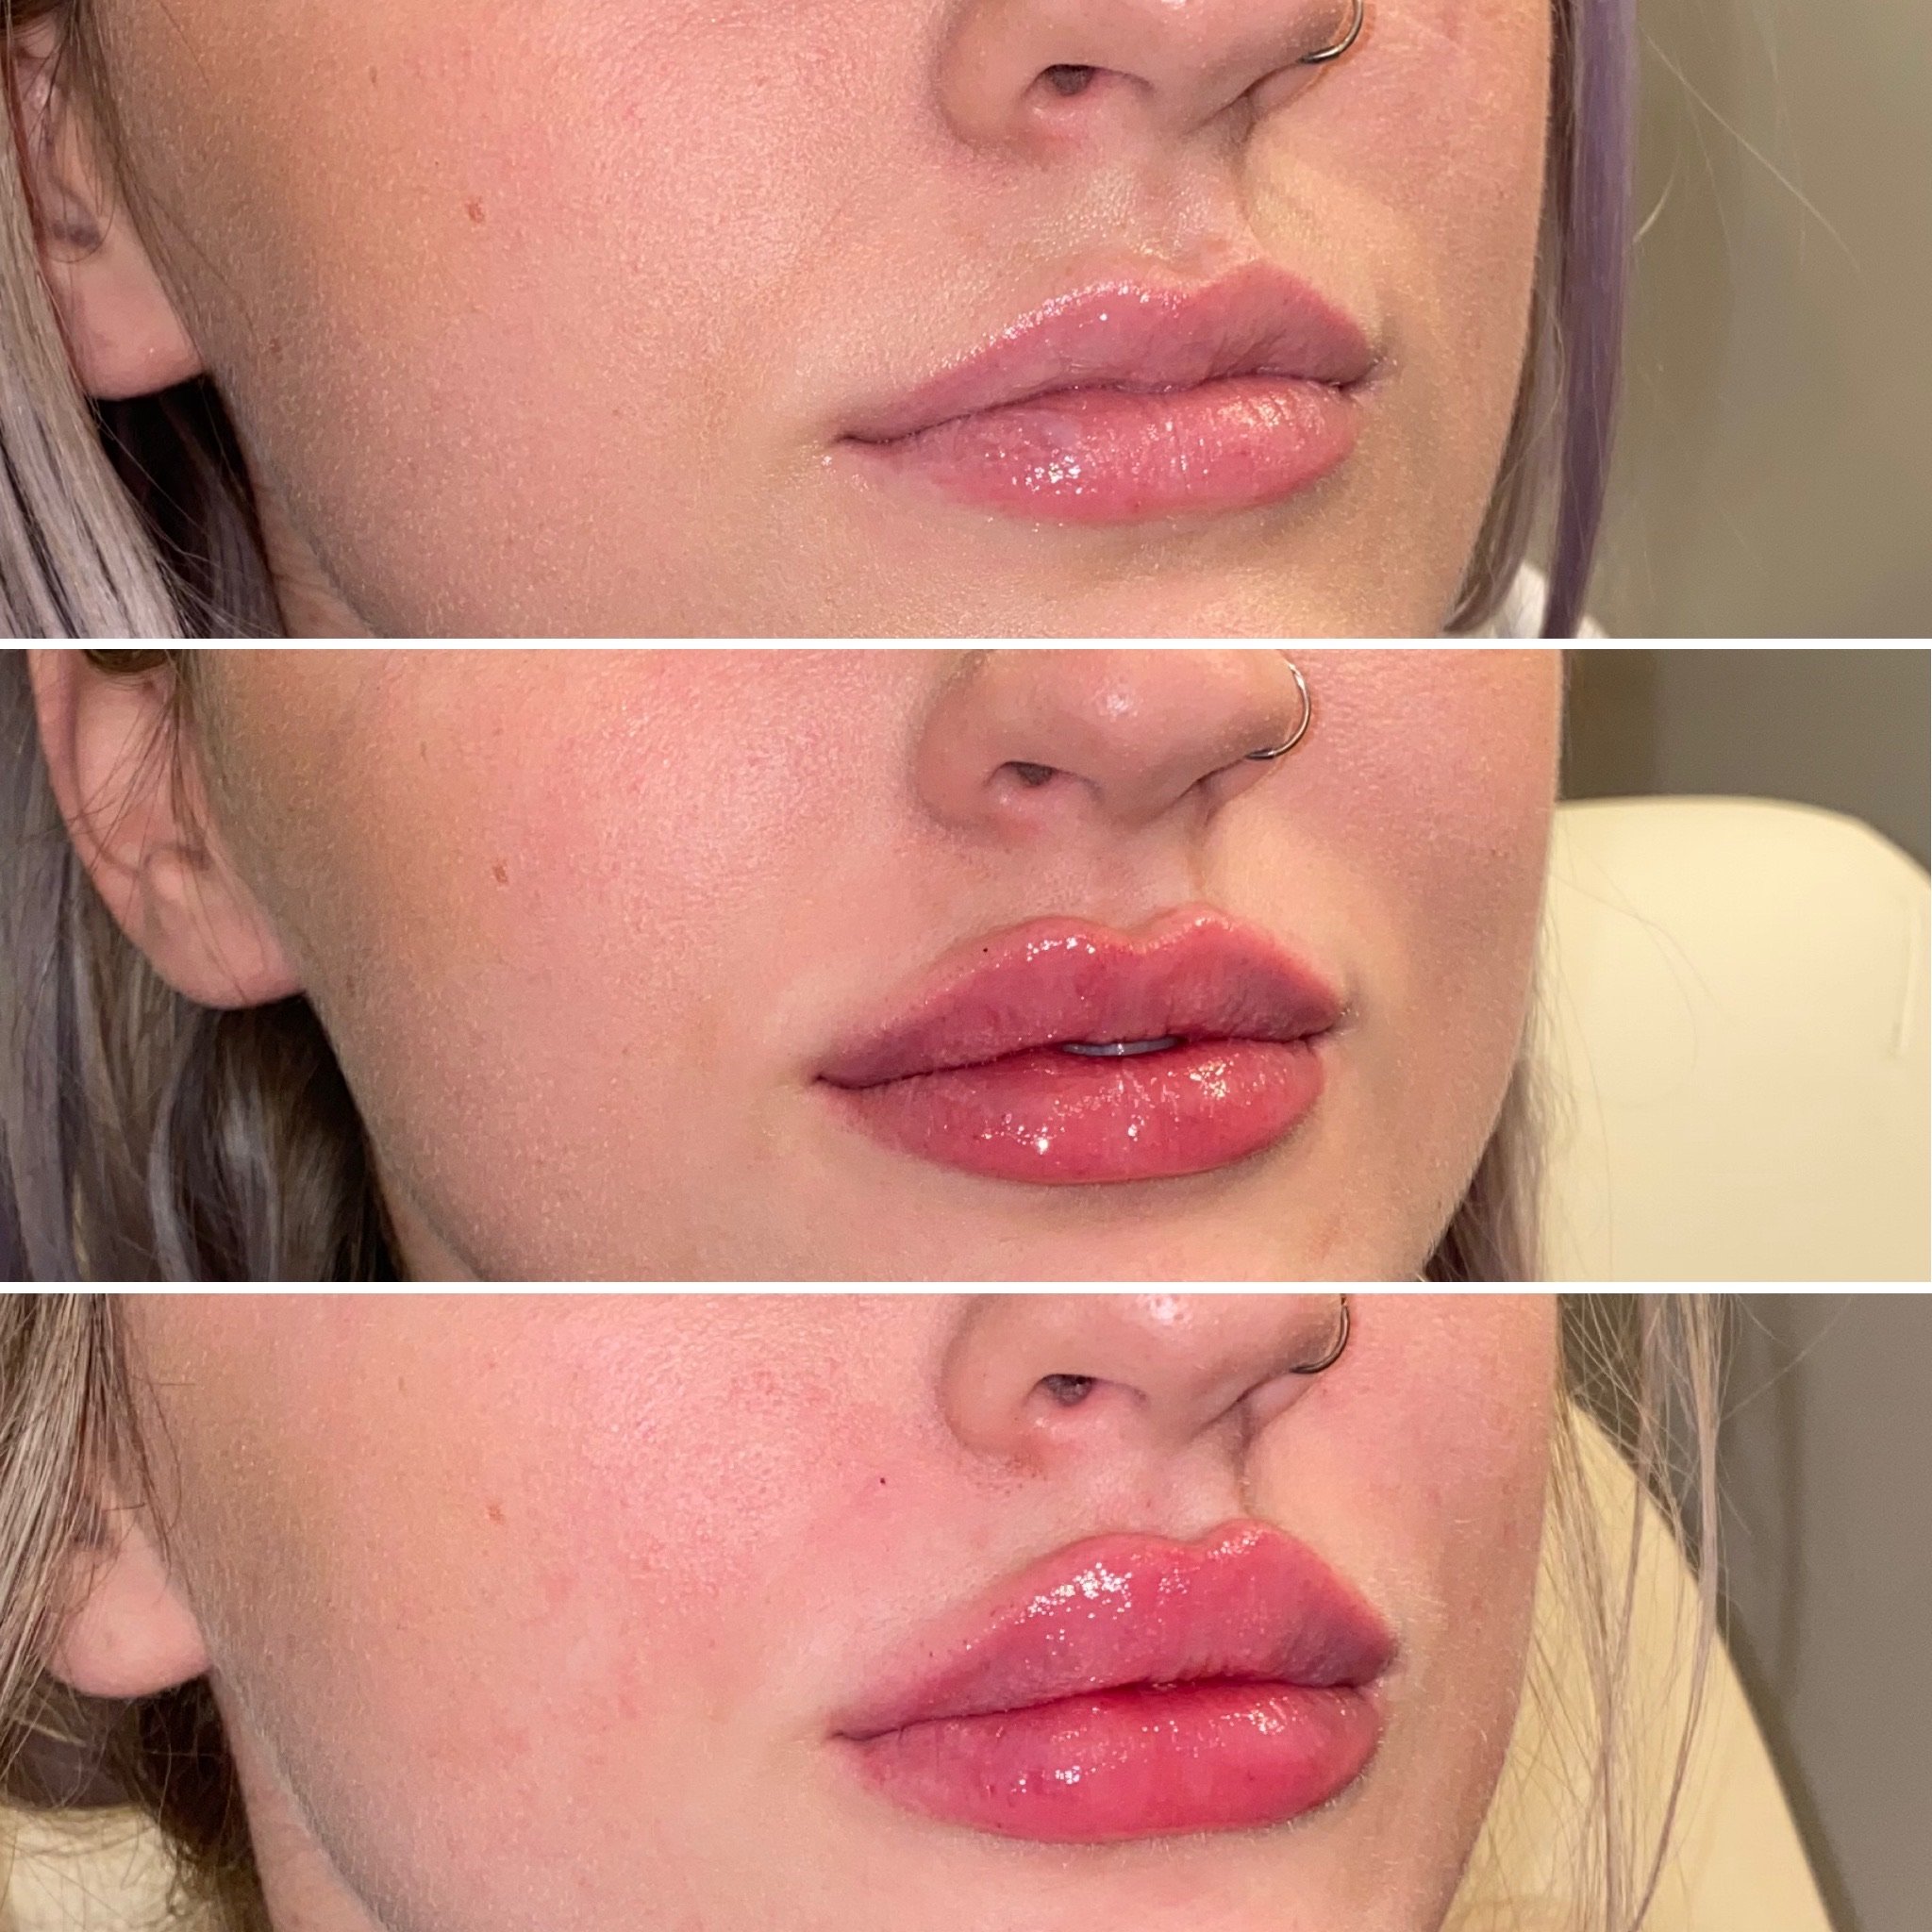 Austin Lip Augmentation - Lip Injections & Implants